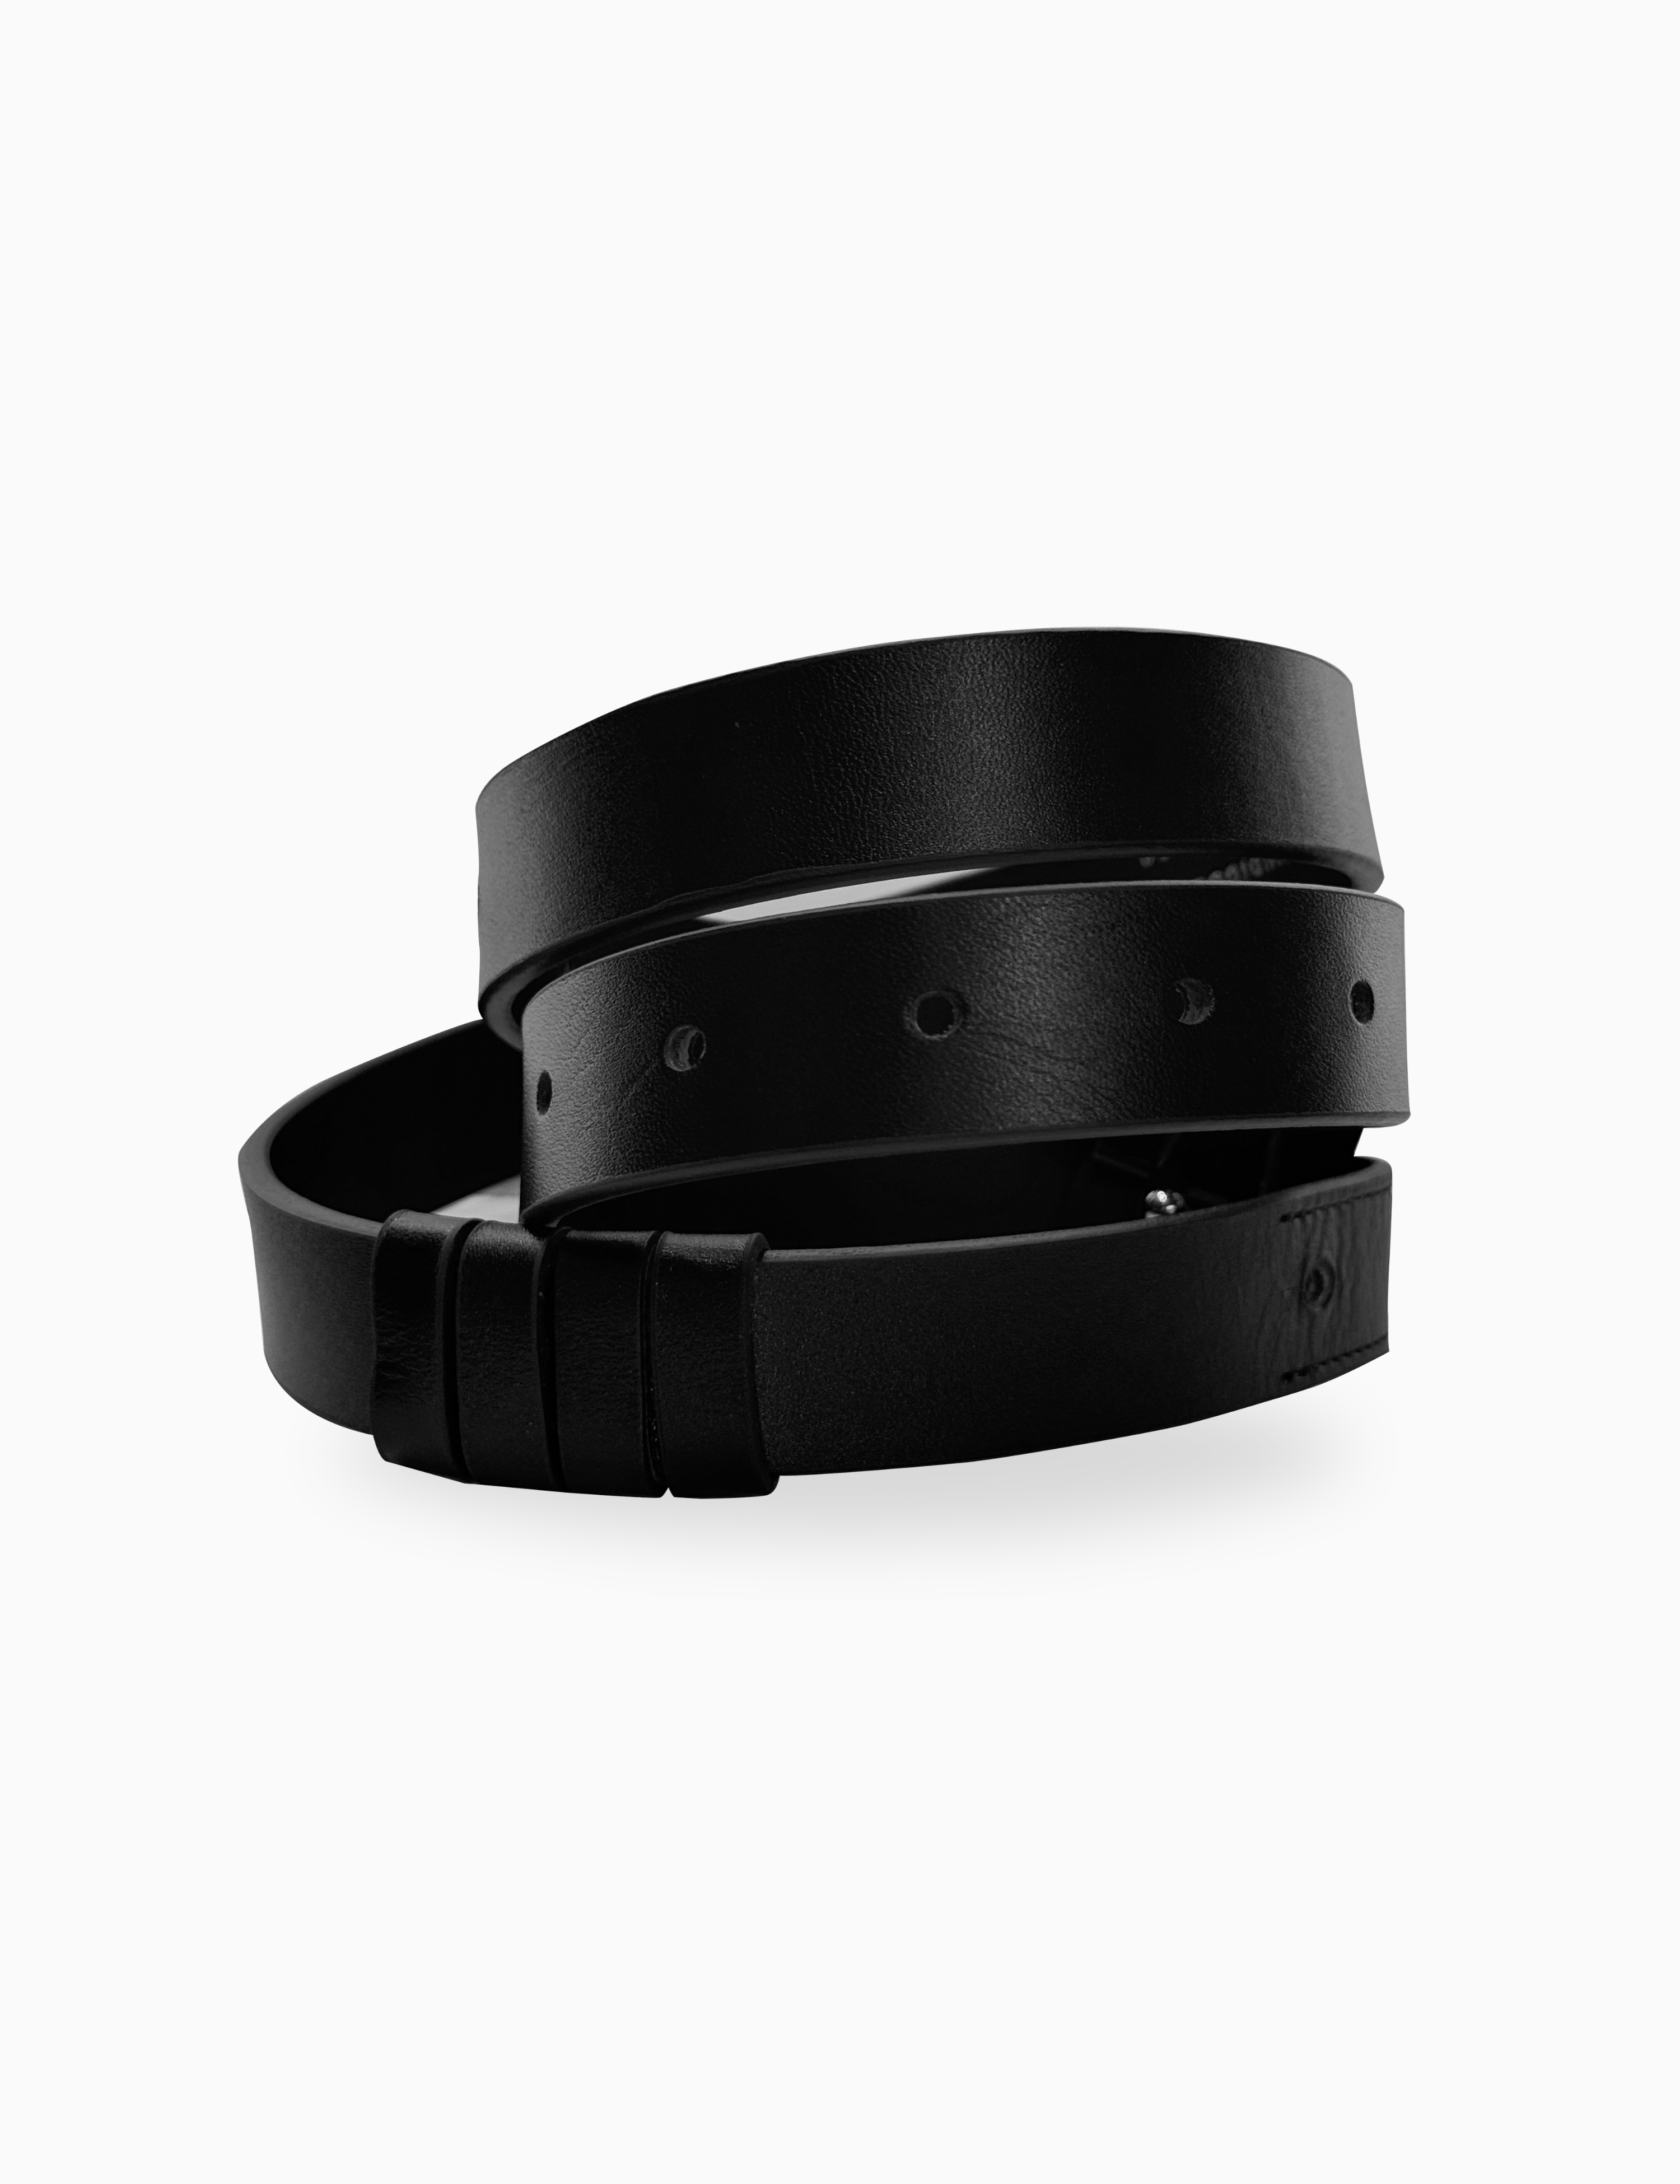 The Black Smooth Belt Strap